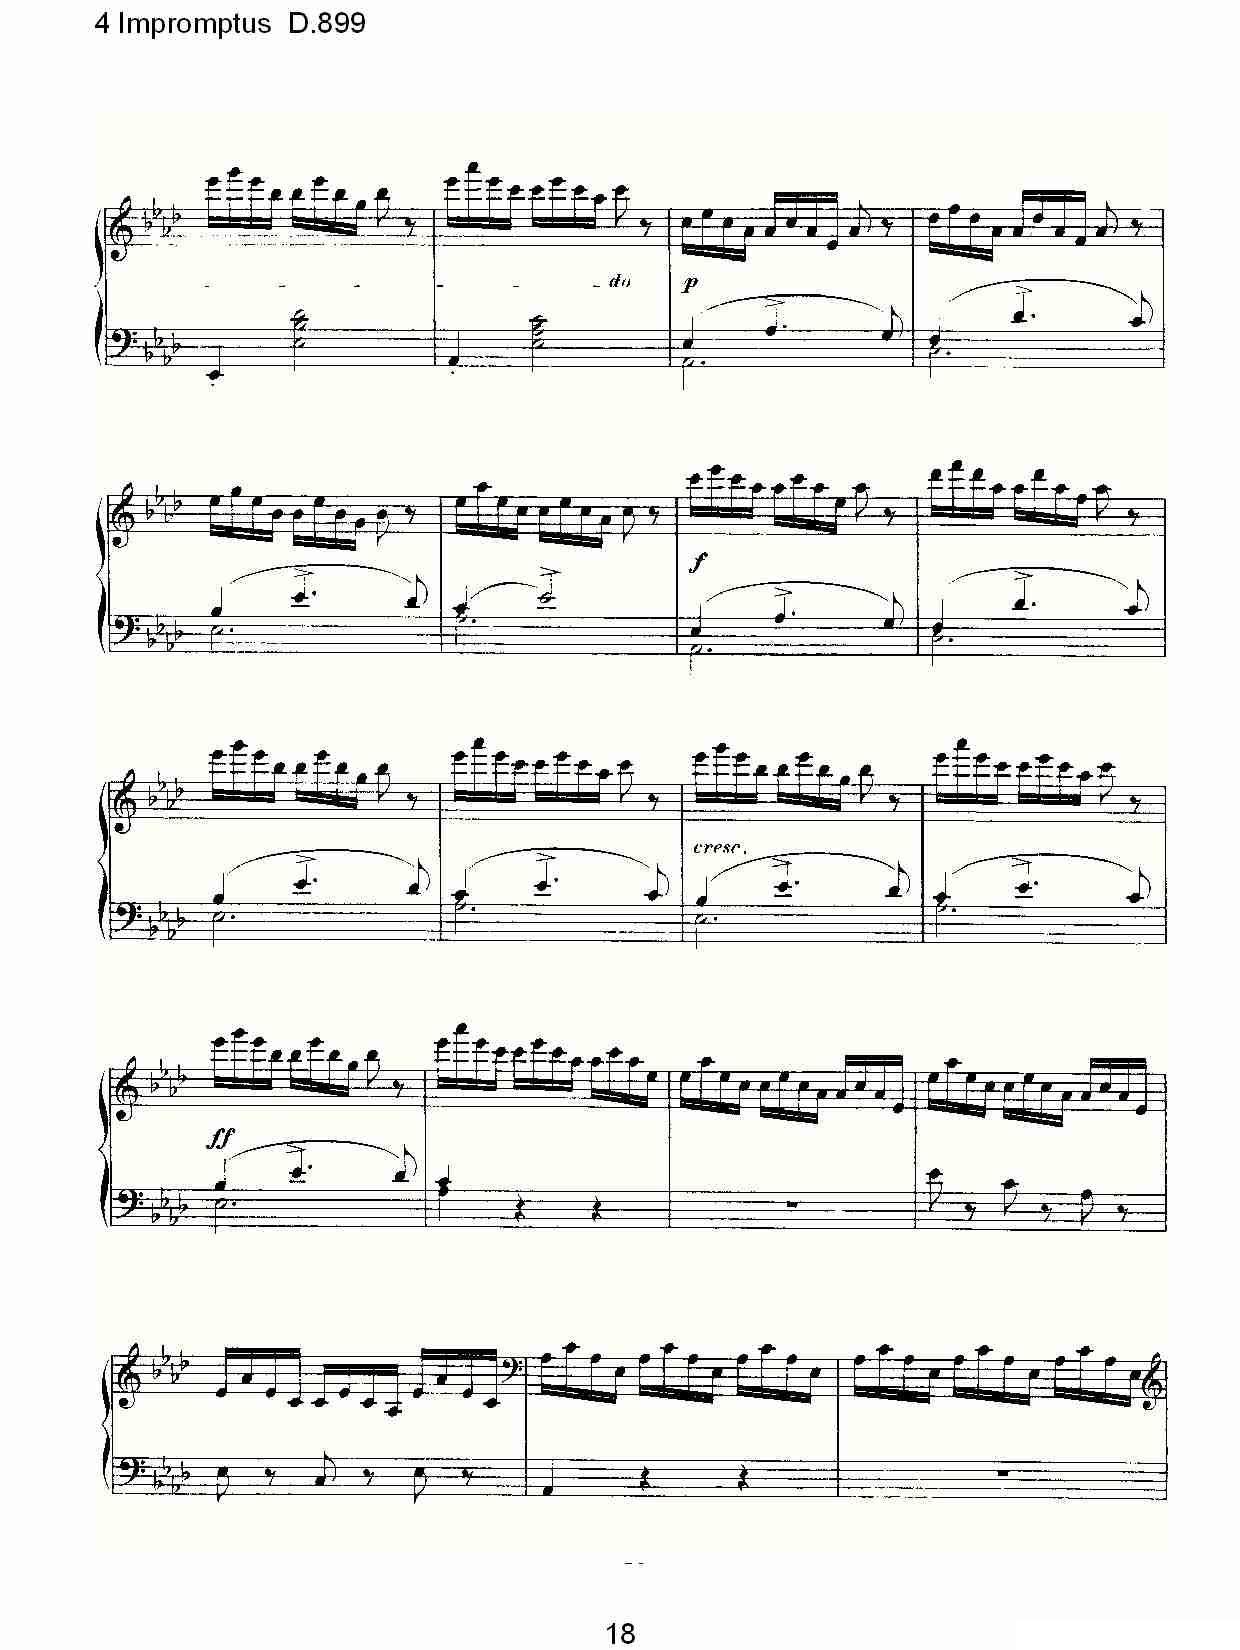 4 Impromptus D.899（4人即兴演奏 D.899）钢琴曲谱（图18）